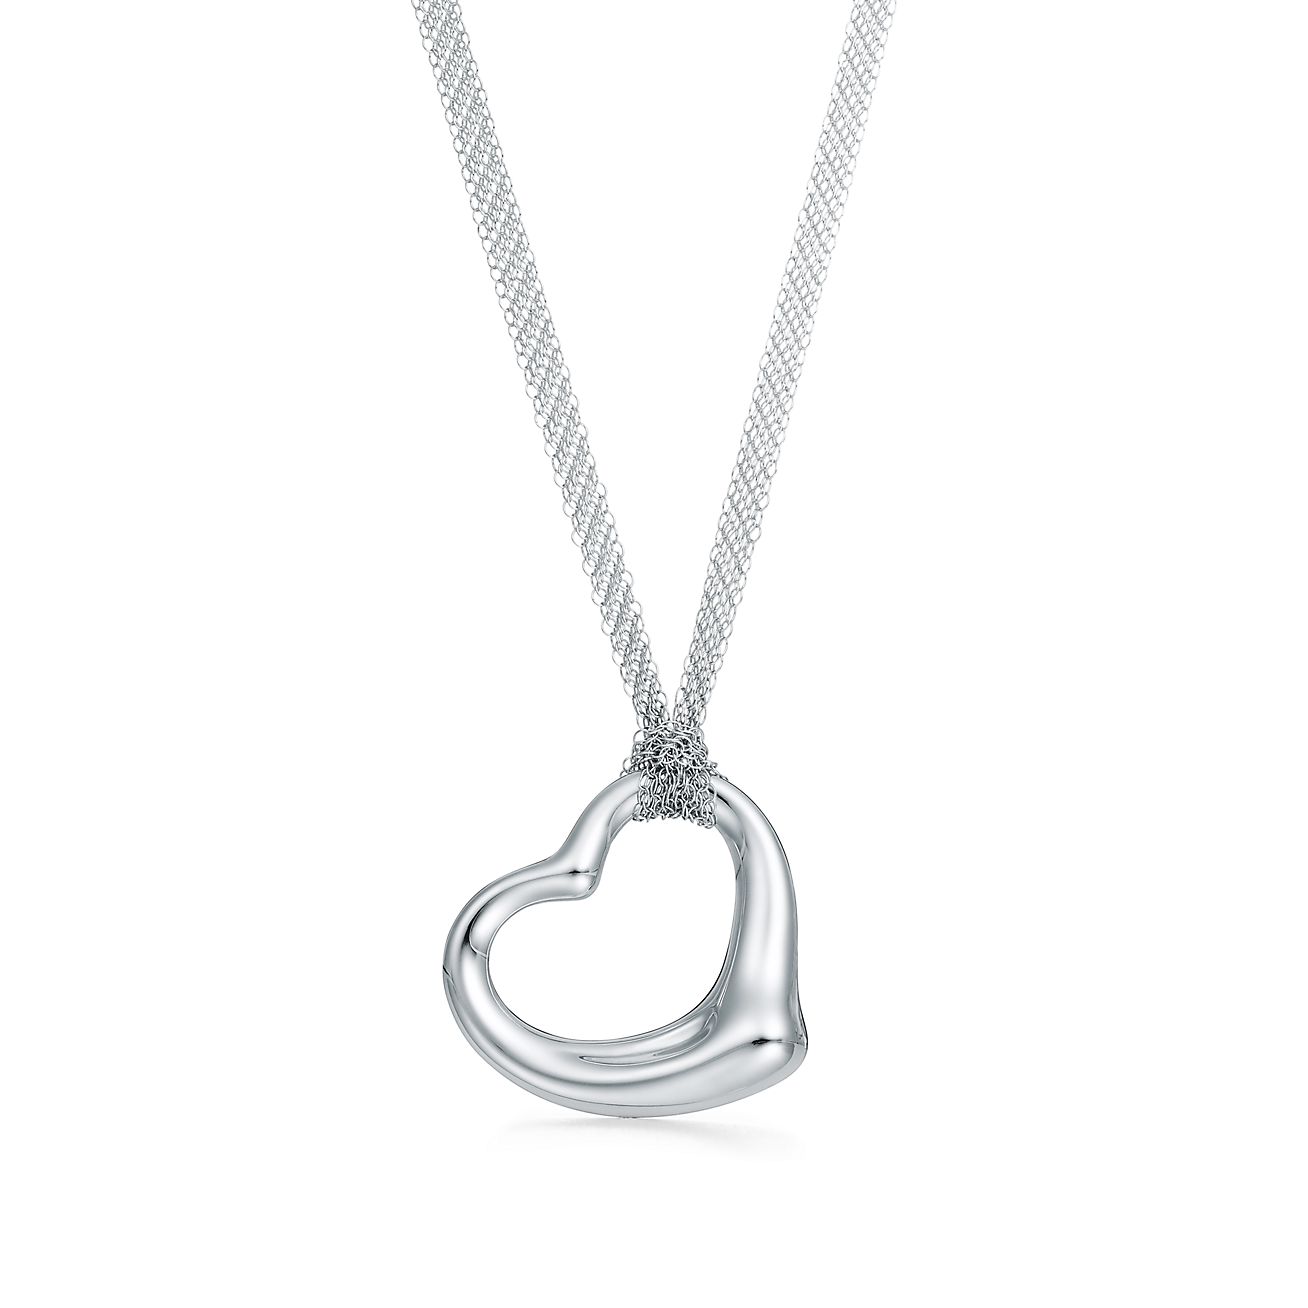 Elsa Peretti® Open Heart pendant in sterling silver on a 30